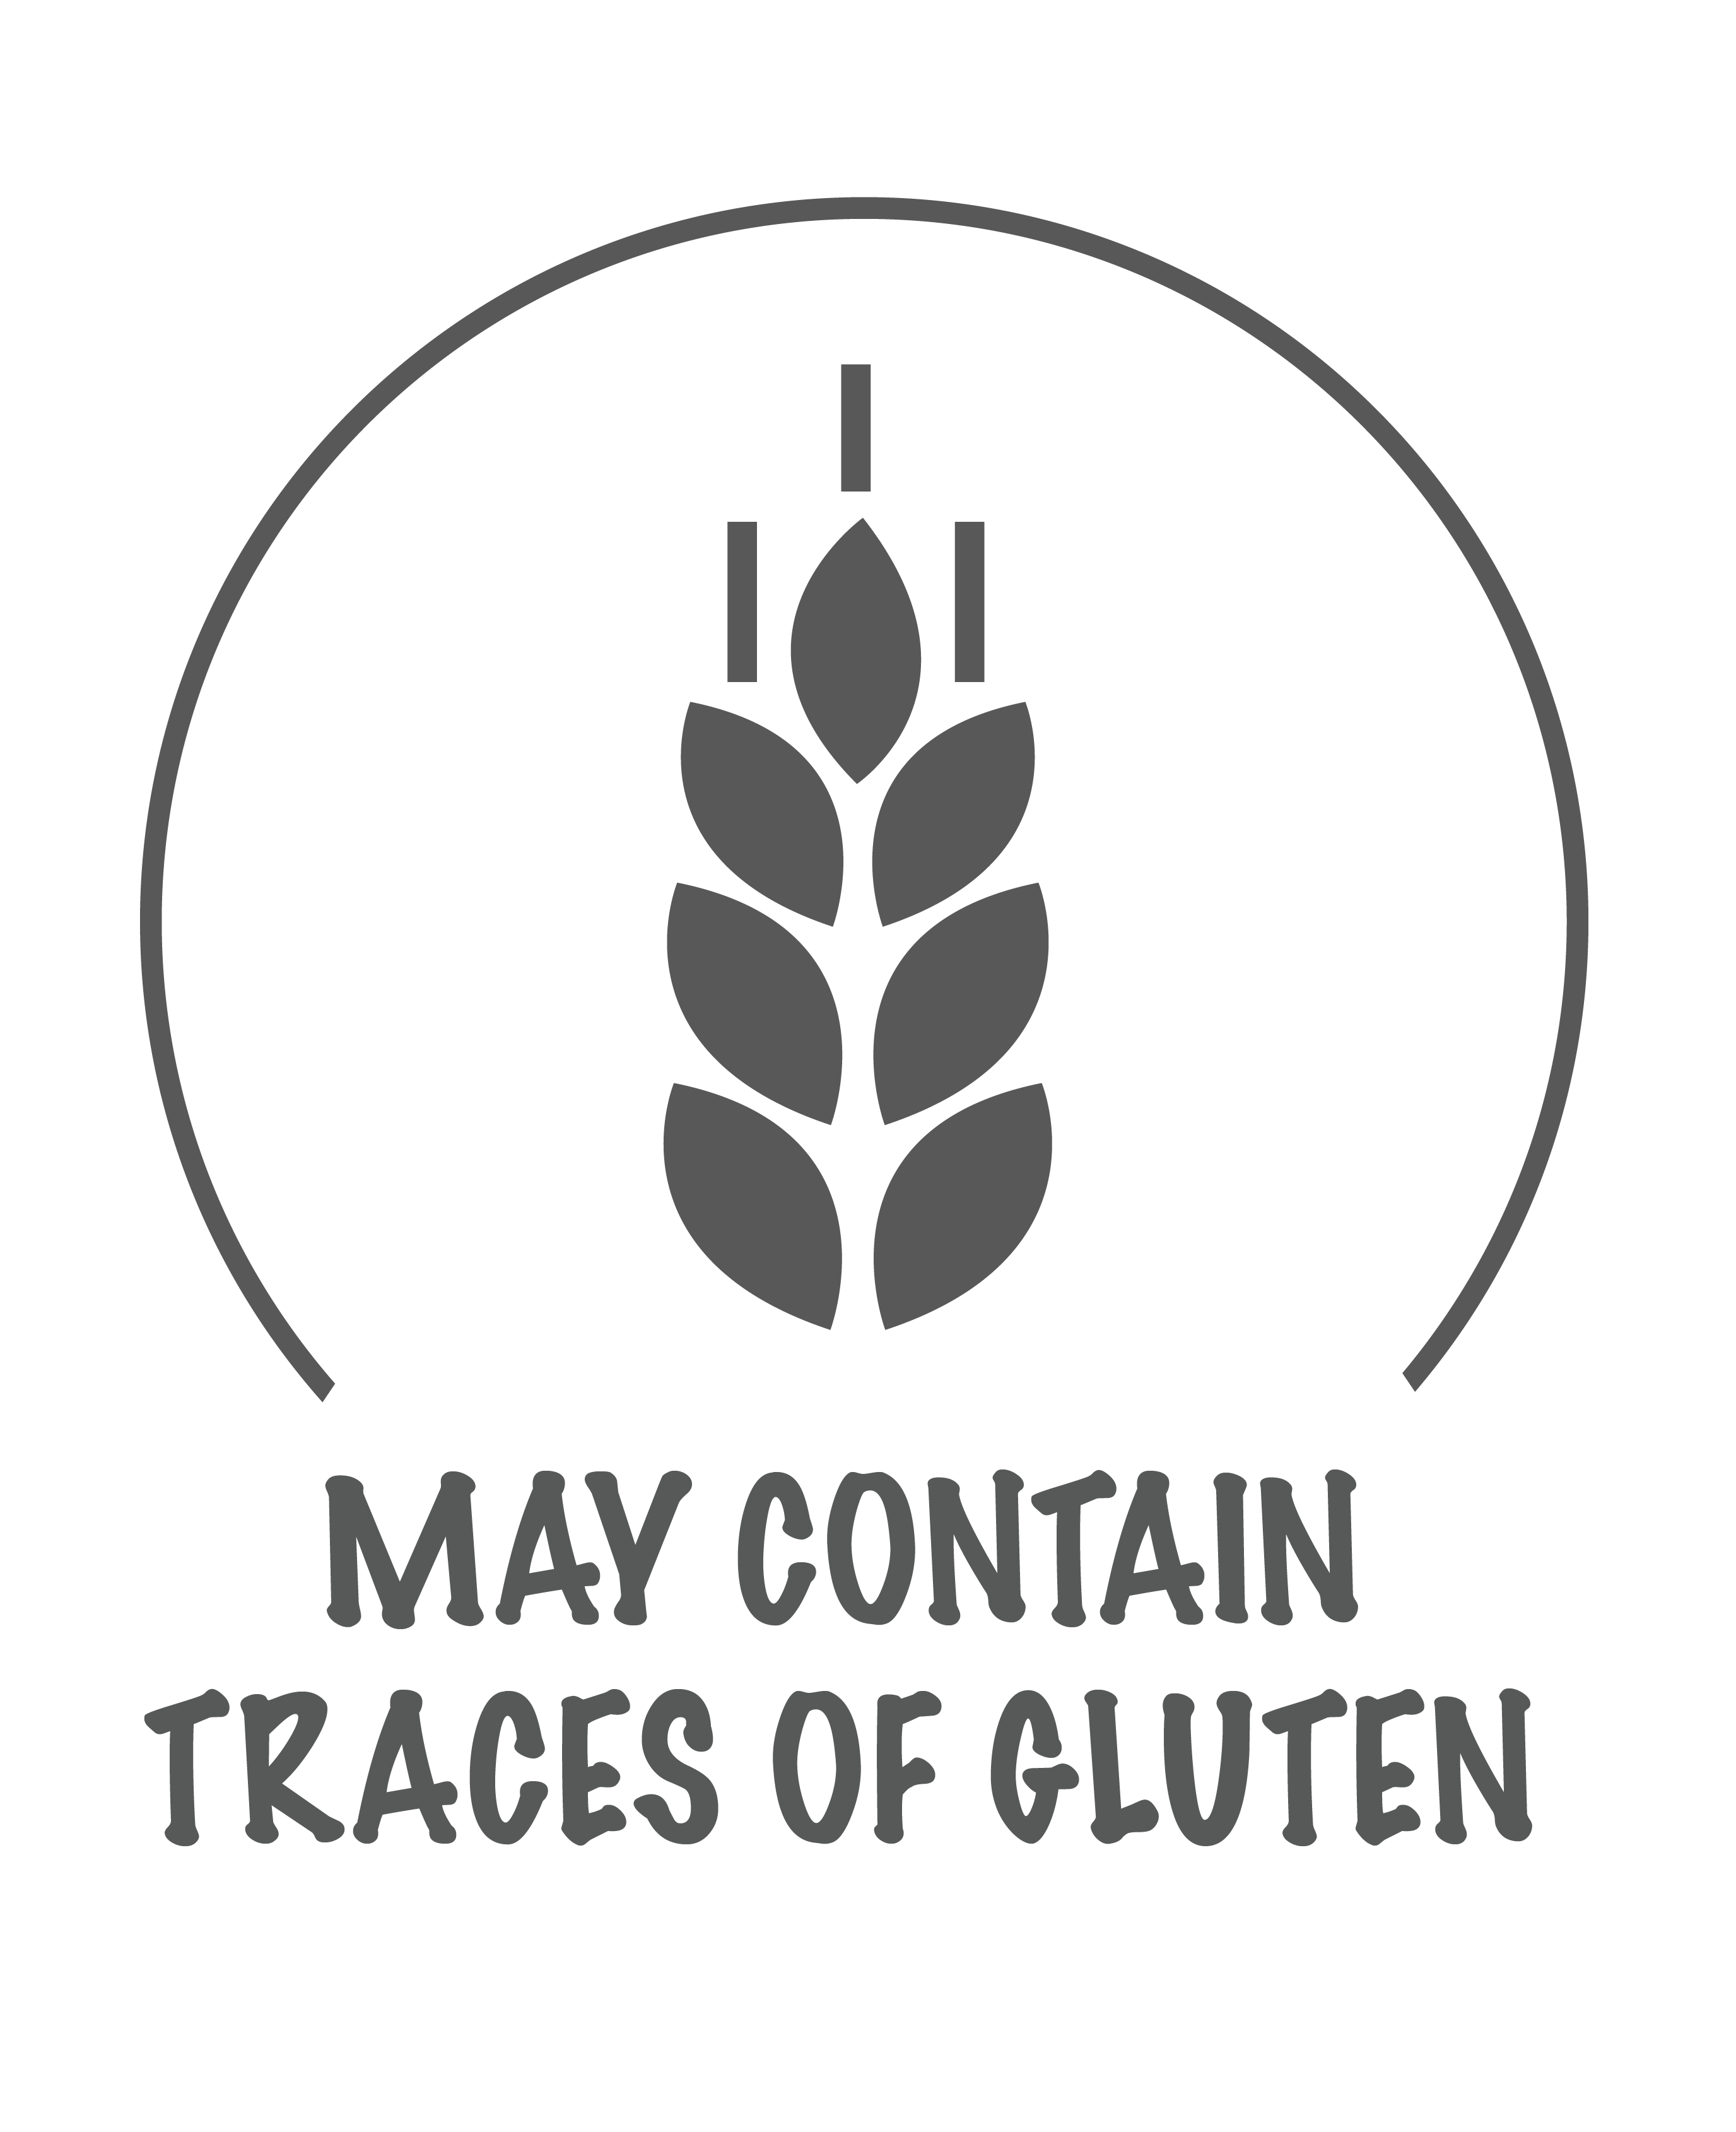 Traces Of Gluten